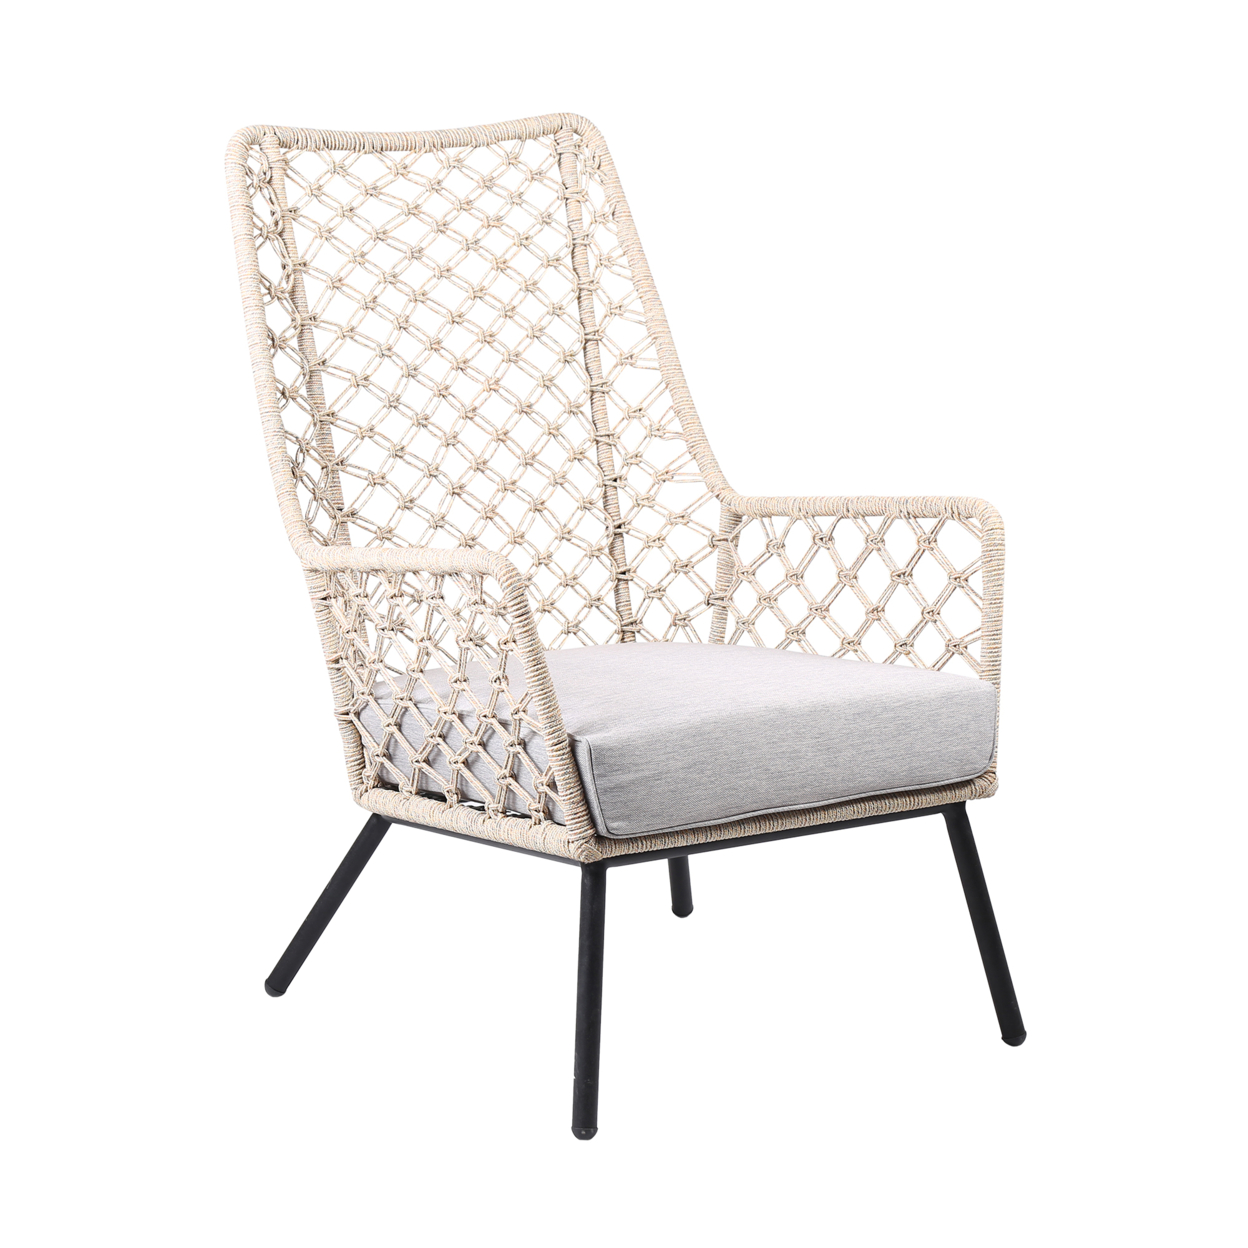 Indoor Outdoor Lounge Chair With Intricate Woven Lattice Back, Beige- Saltoro Sherpi